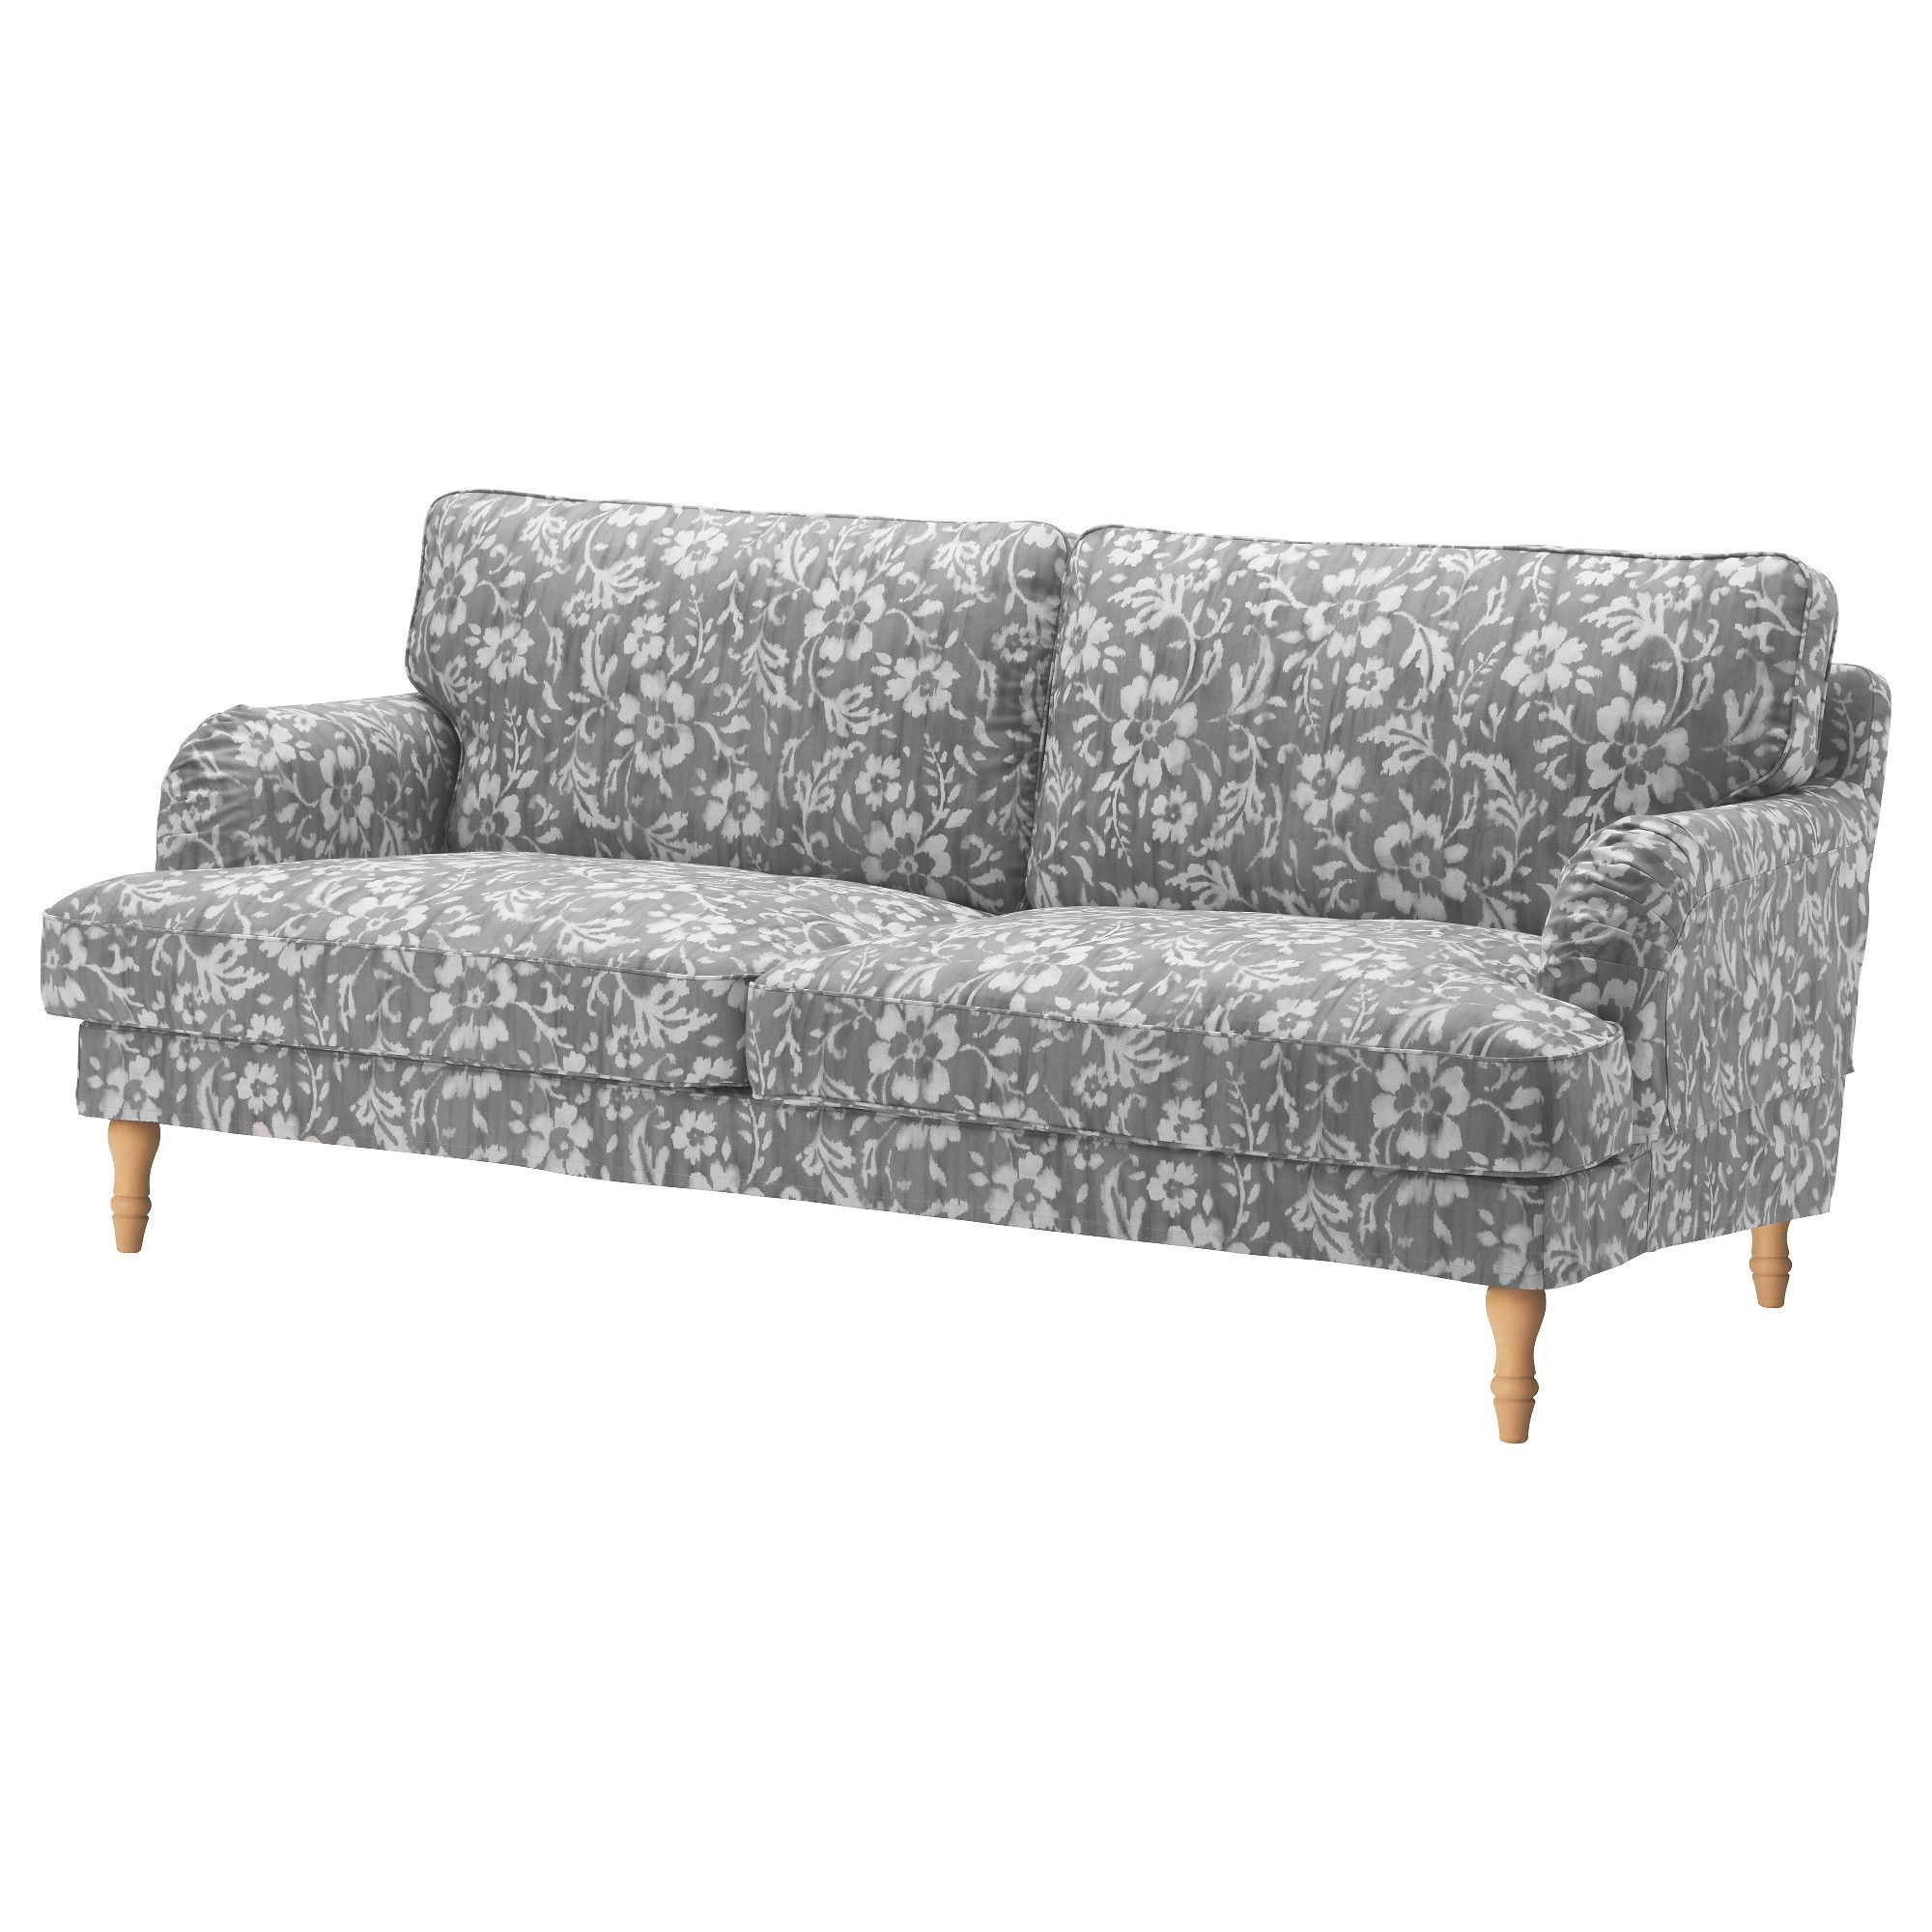 Garten Lounge sofa Luxus 3er sofa Outdoor